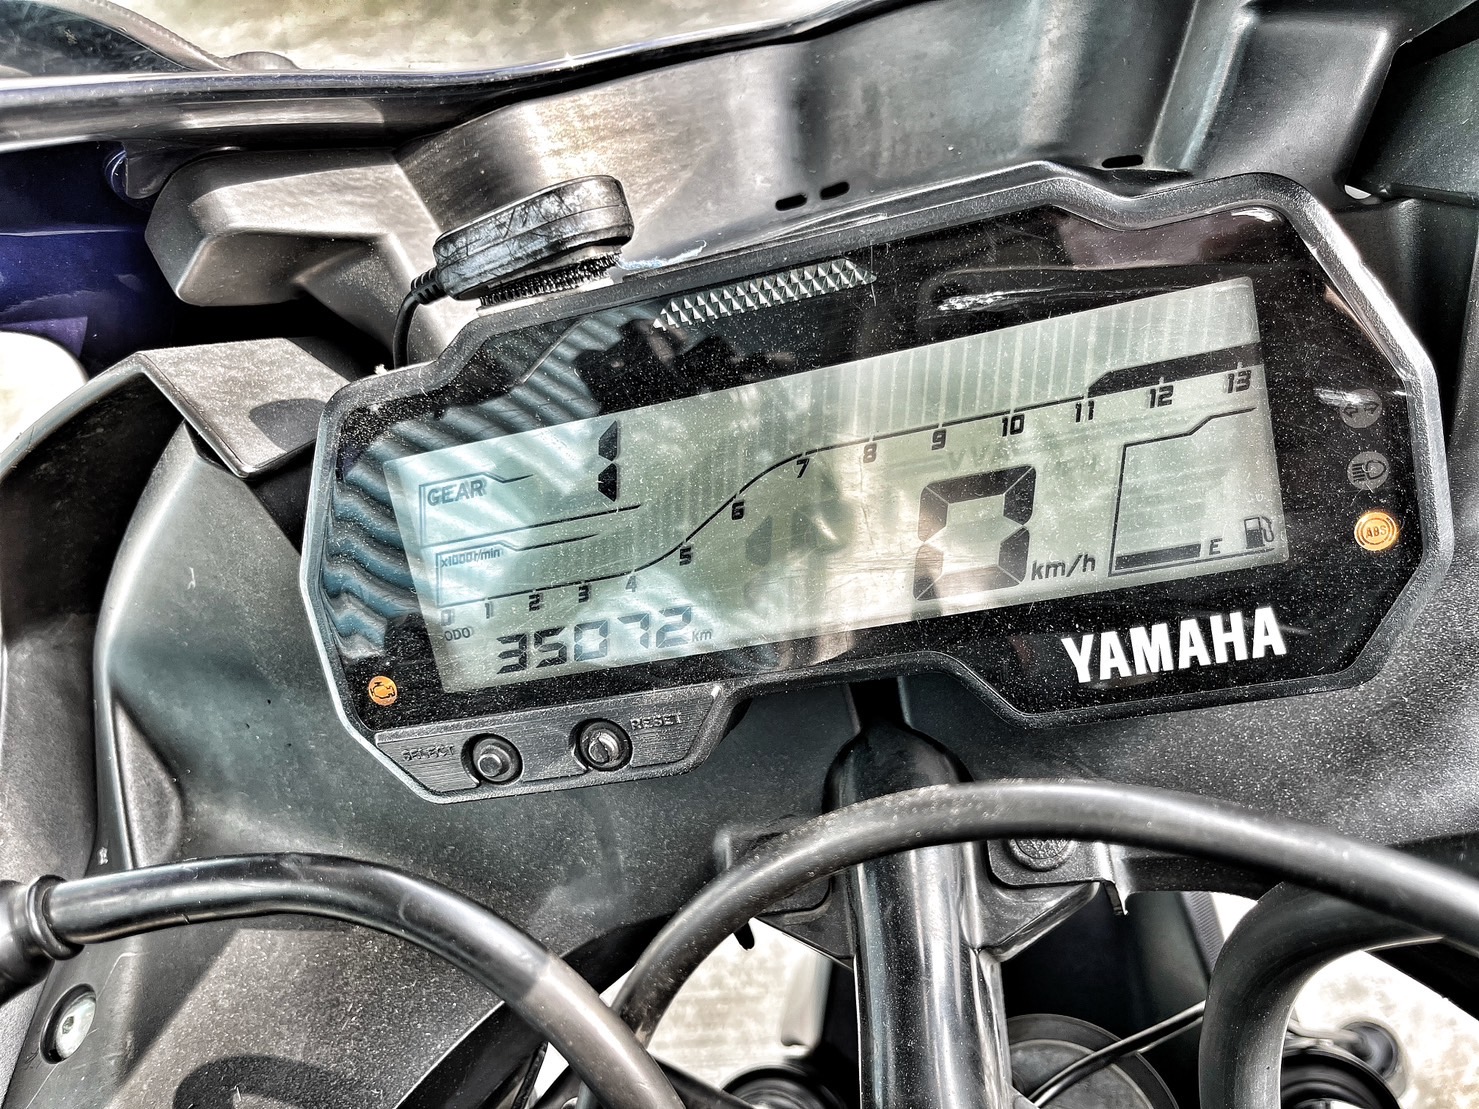 YAMAHA YZF-R15 - 中古/二手車出售中 行車記錄器 手機架 拉桿 小資族二手重機買賣 | 小資族二手重機買賣